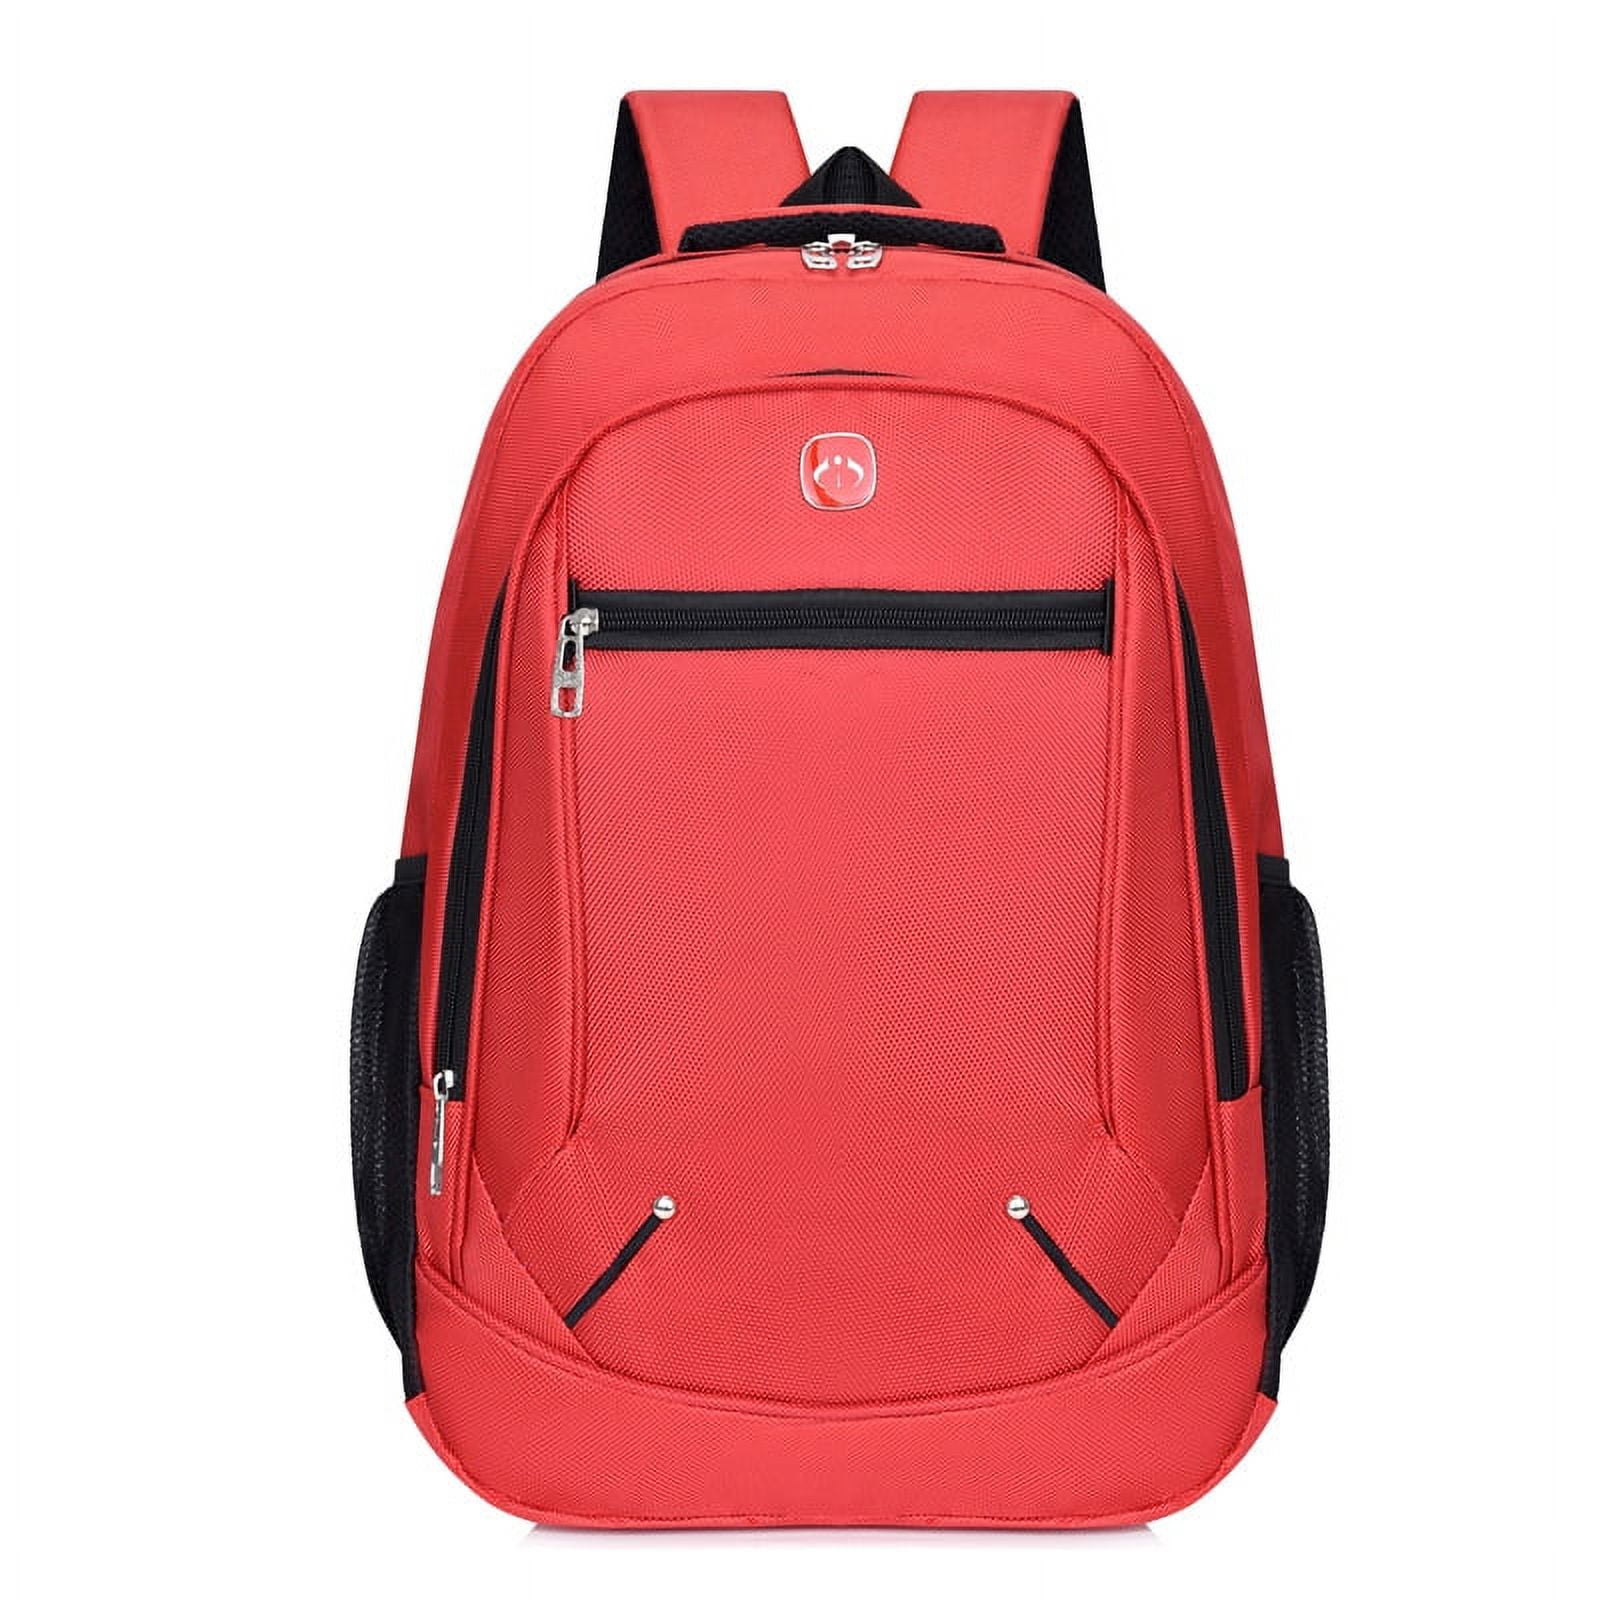 BackTpack Premium 4.1 Ergonomic Carry Bag for Good Posture